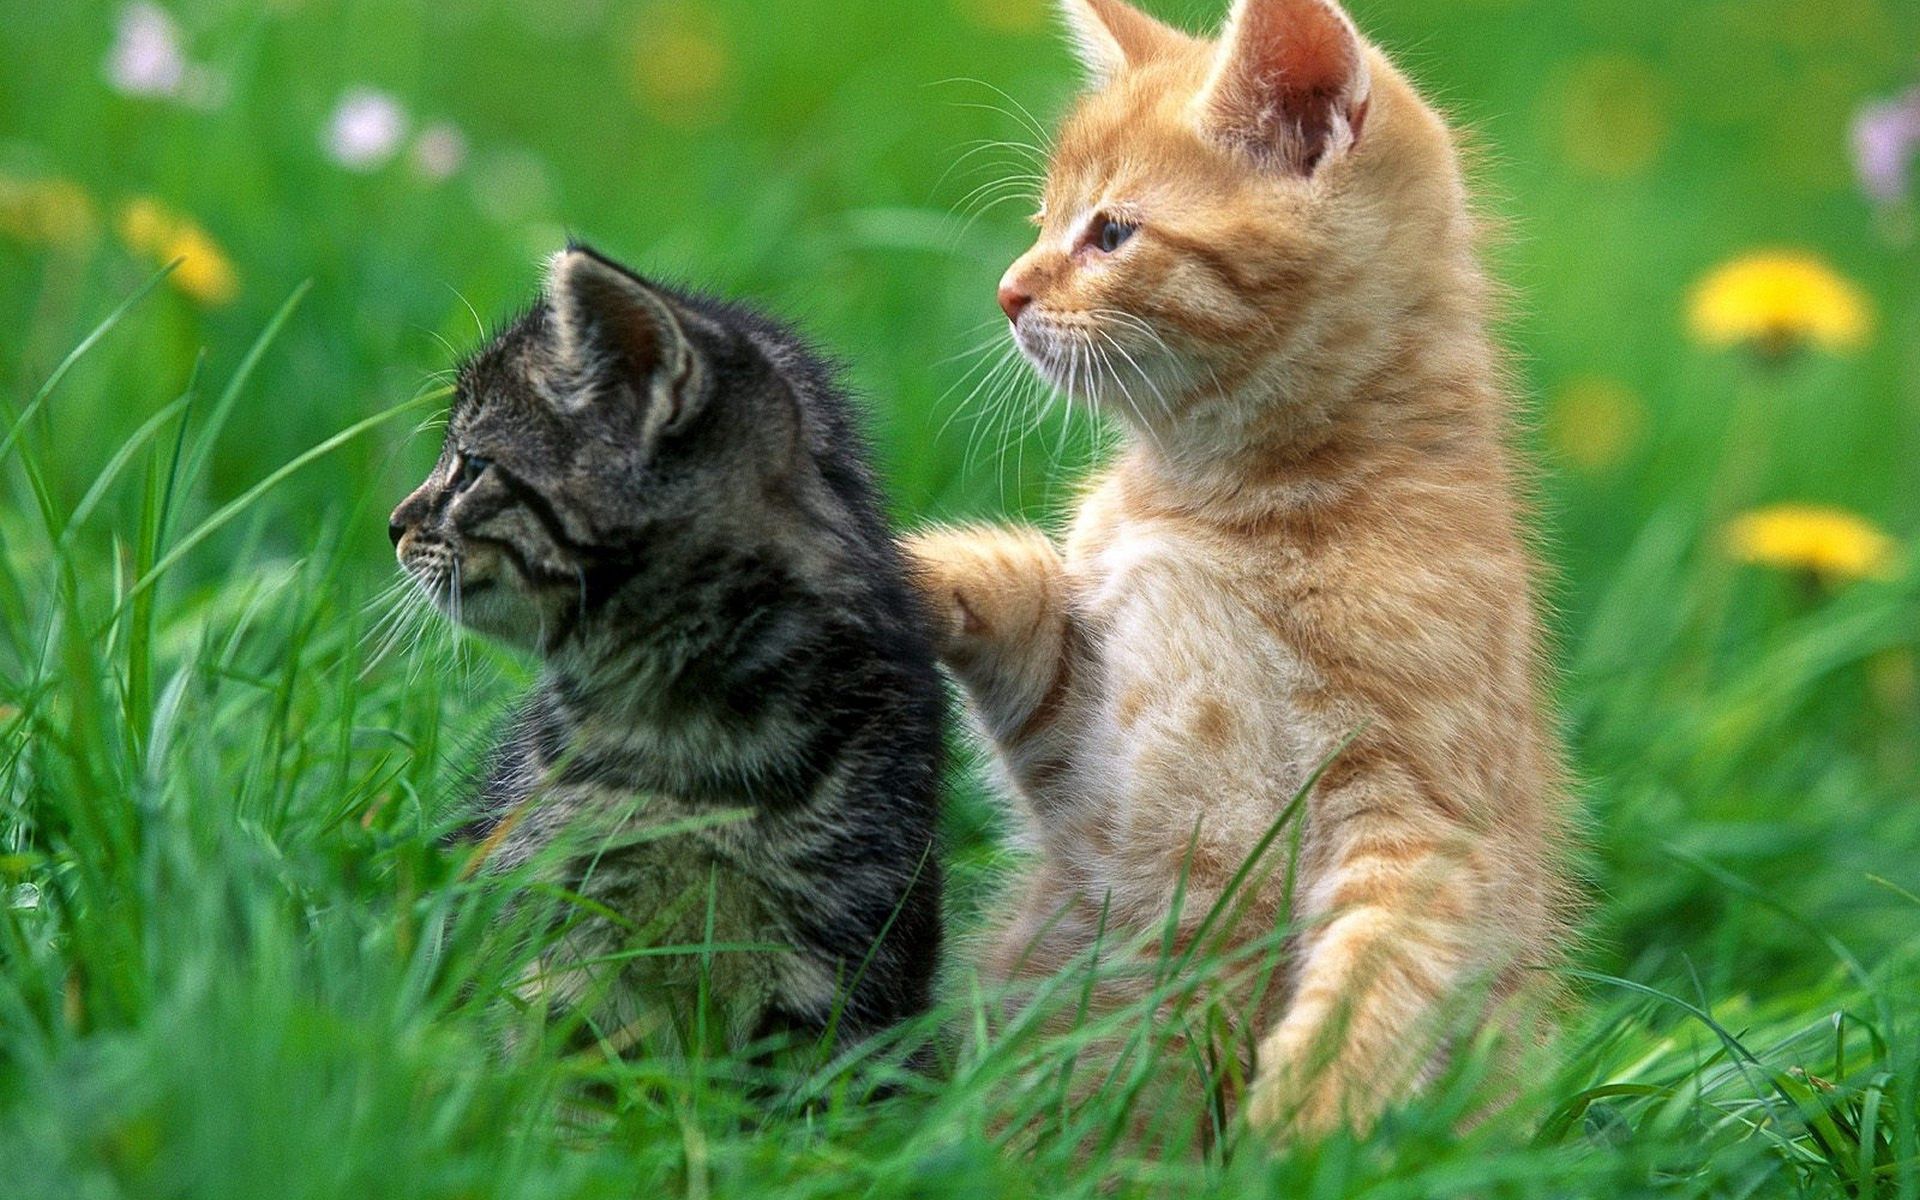 kittens, animals, grass, couple, pair, care, mindfulness, attentiveness